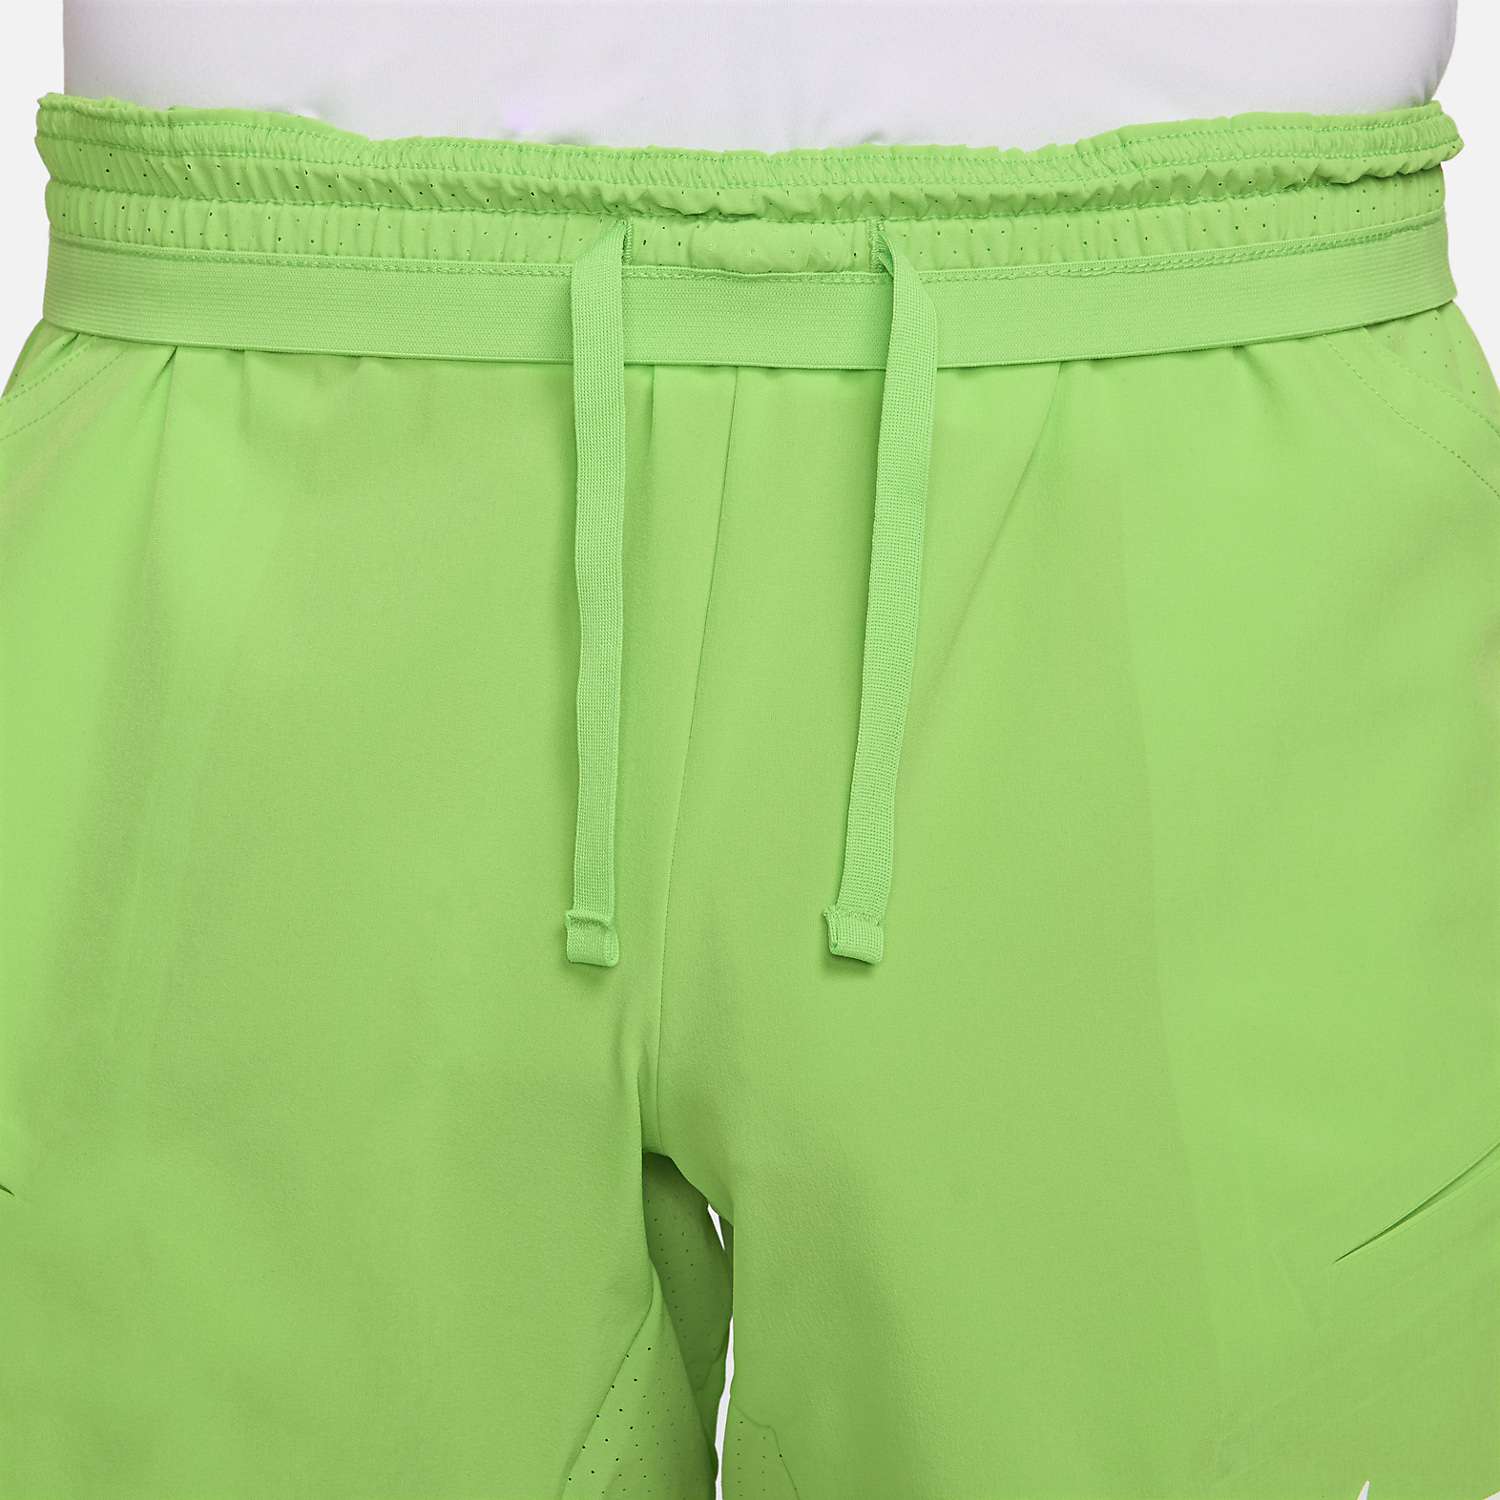 Nike Dri-FIT ADV Rafa Nadal 7in Shorts - Action Green/White